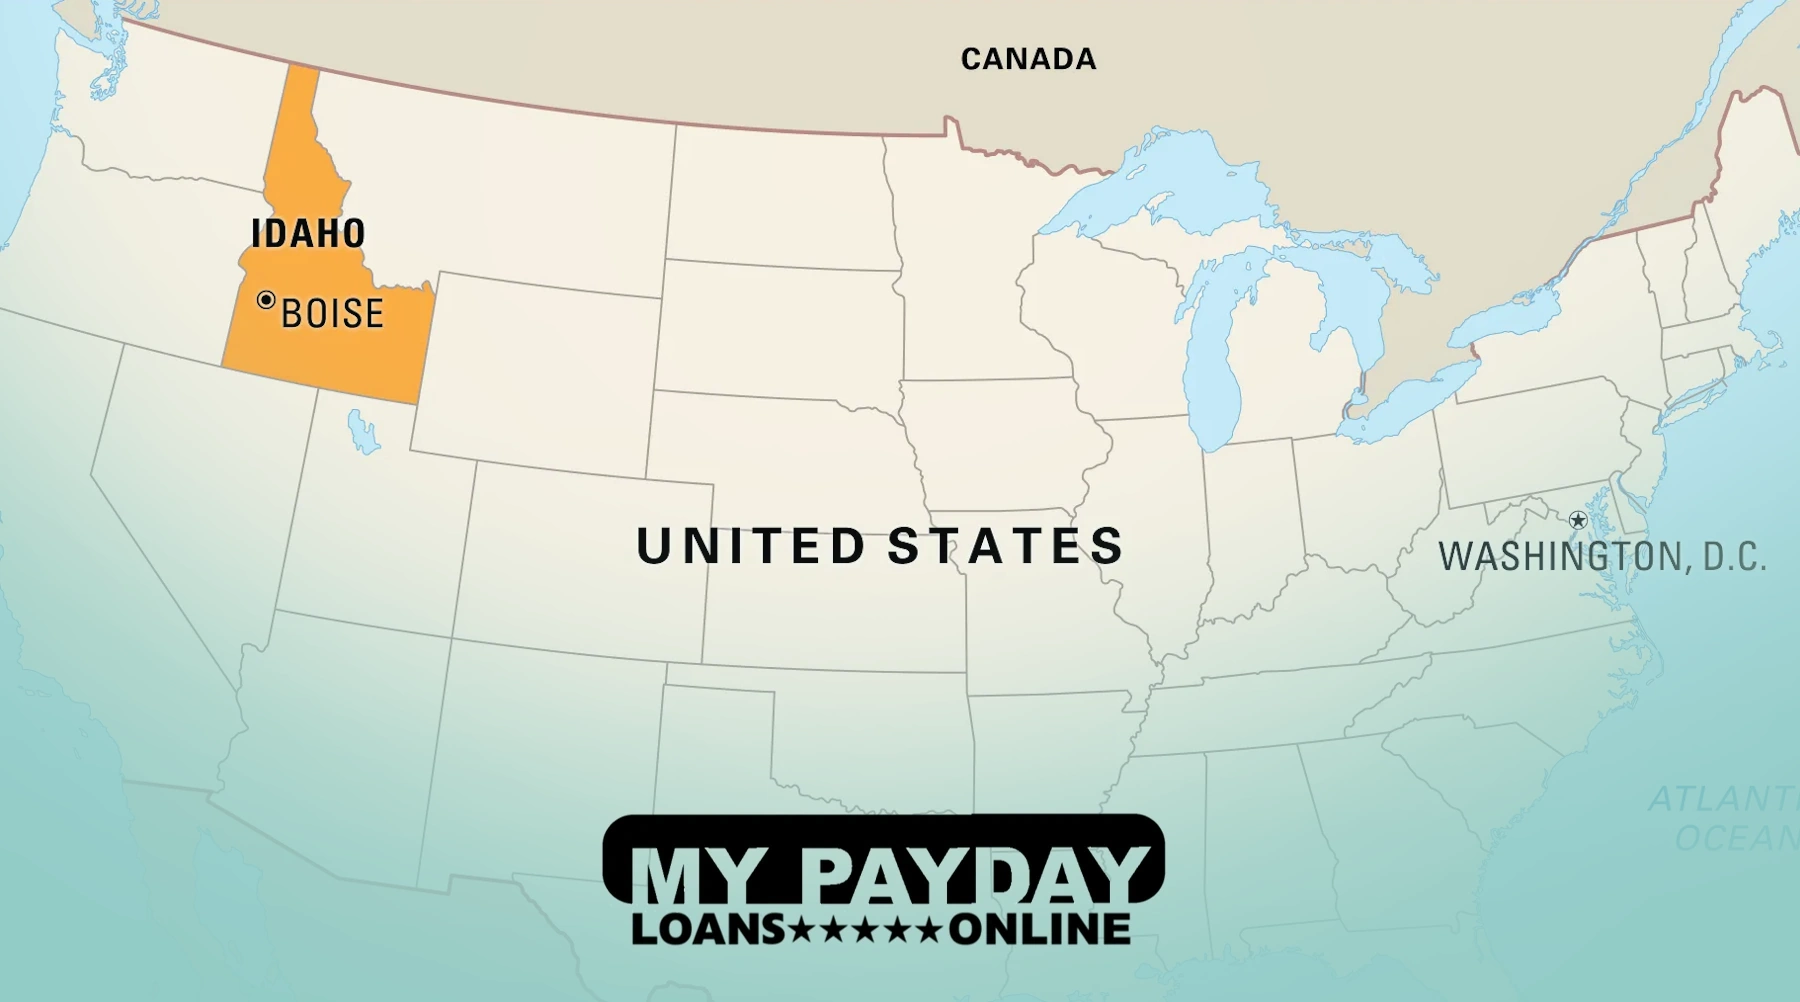 iowa_my_payday_loans_online-1